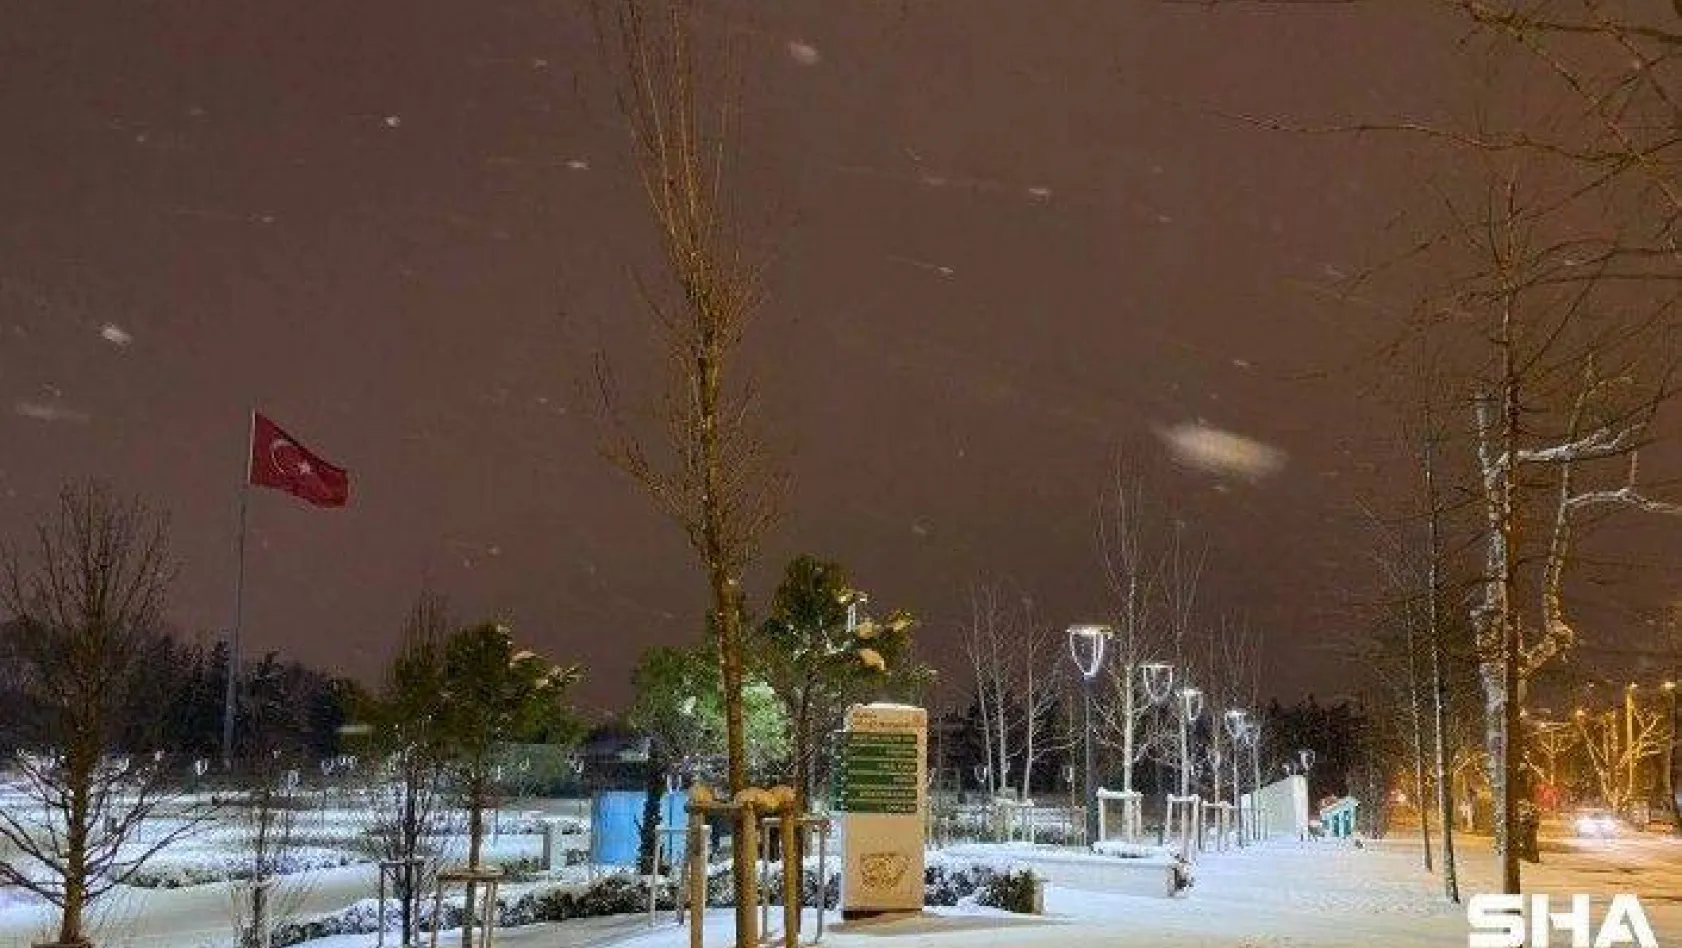 Bursa kent merkezinde kar kalınlığı 14 santimetreyi buldu